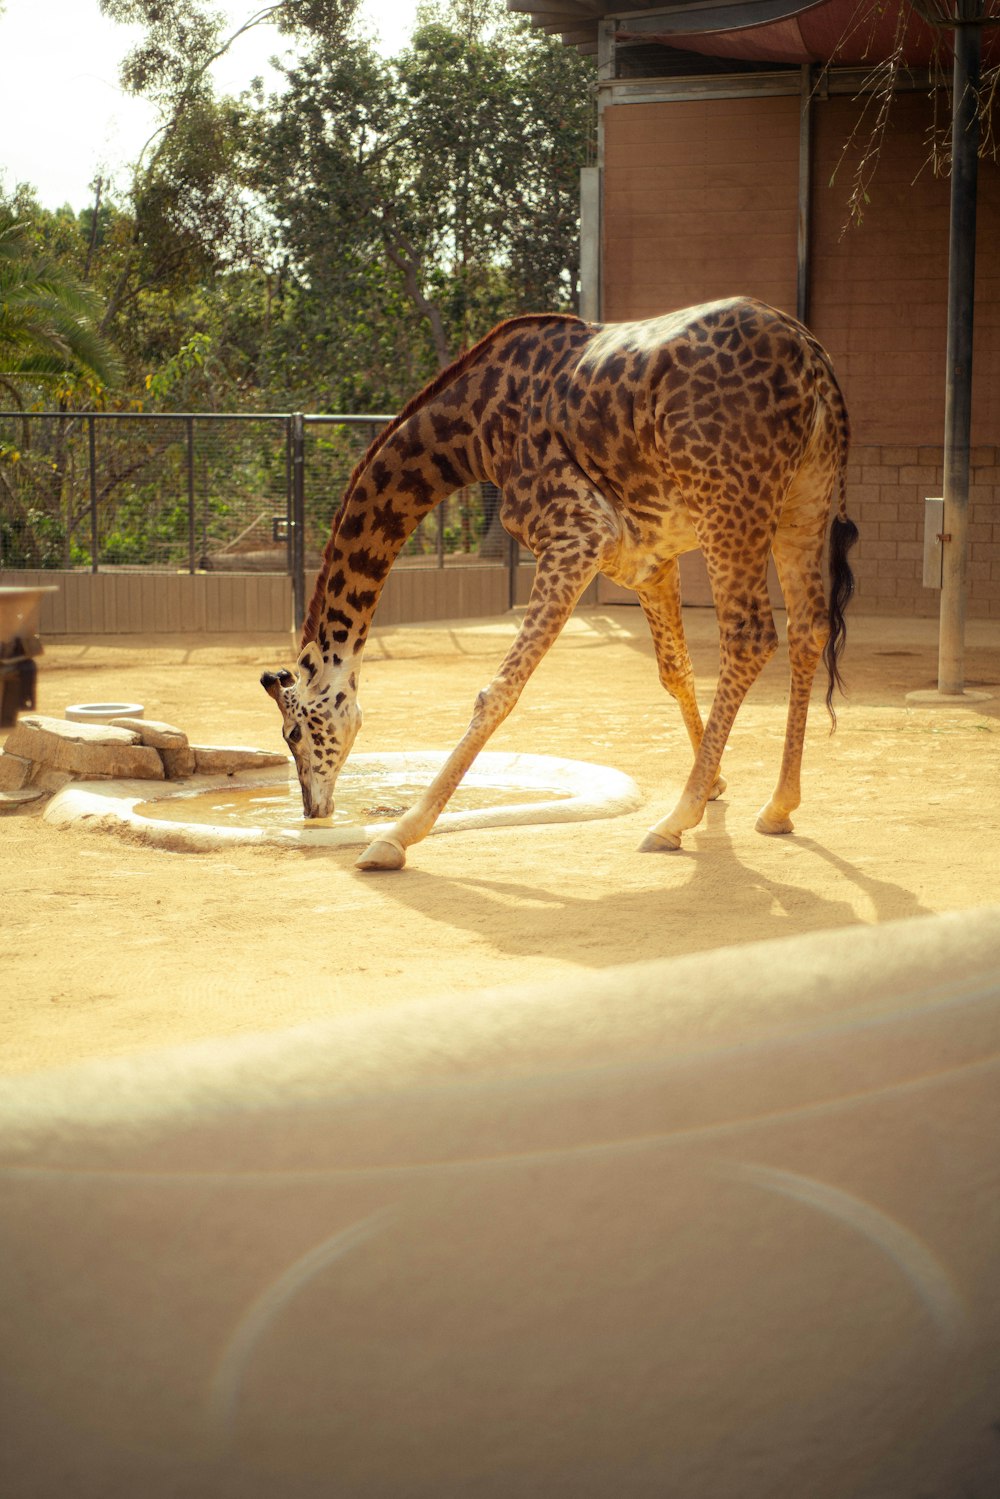 a giraffe eating some food